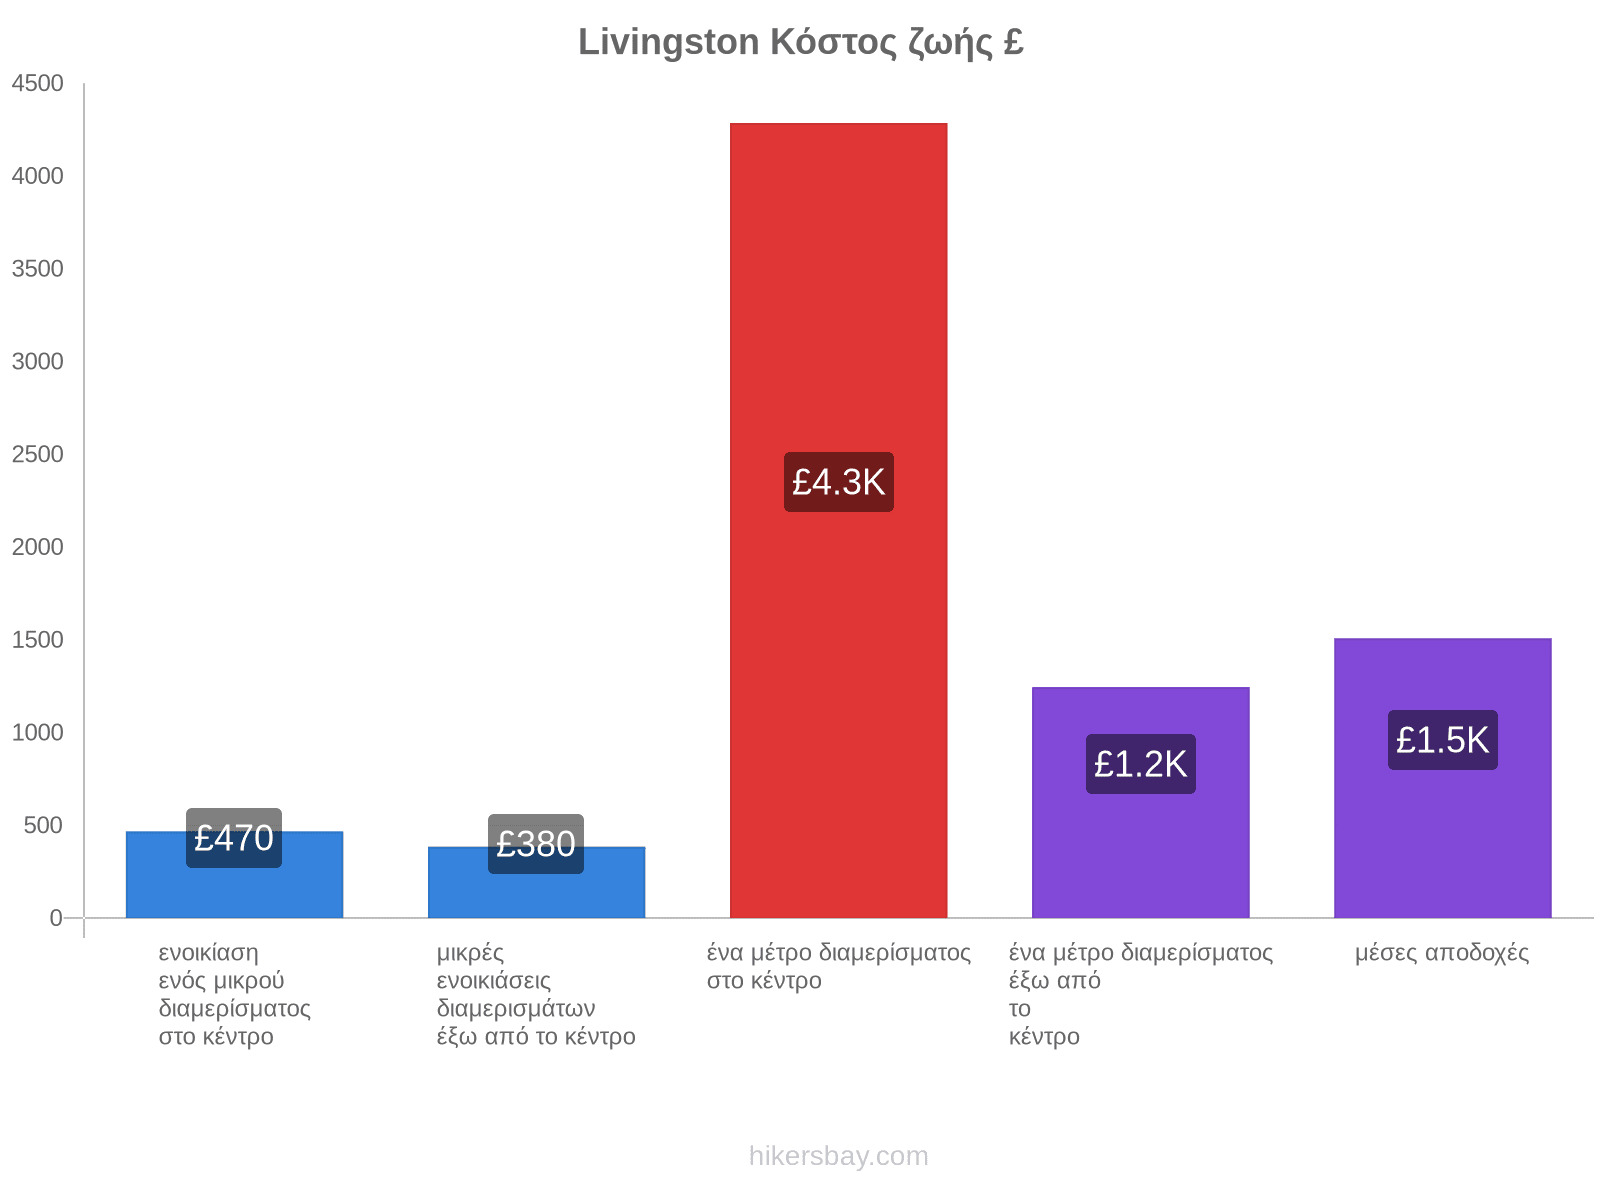 Livingston κόστος ζωής hikersbay.com